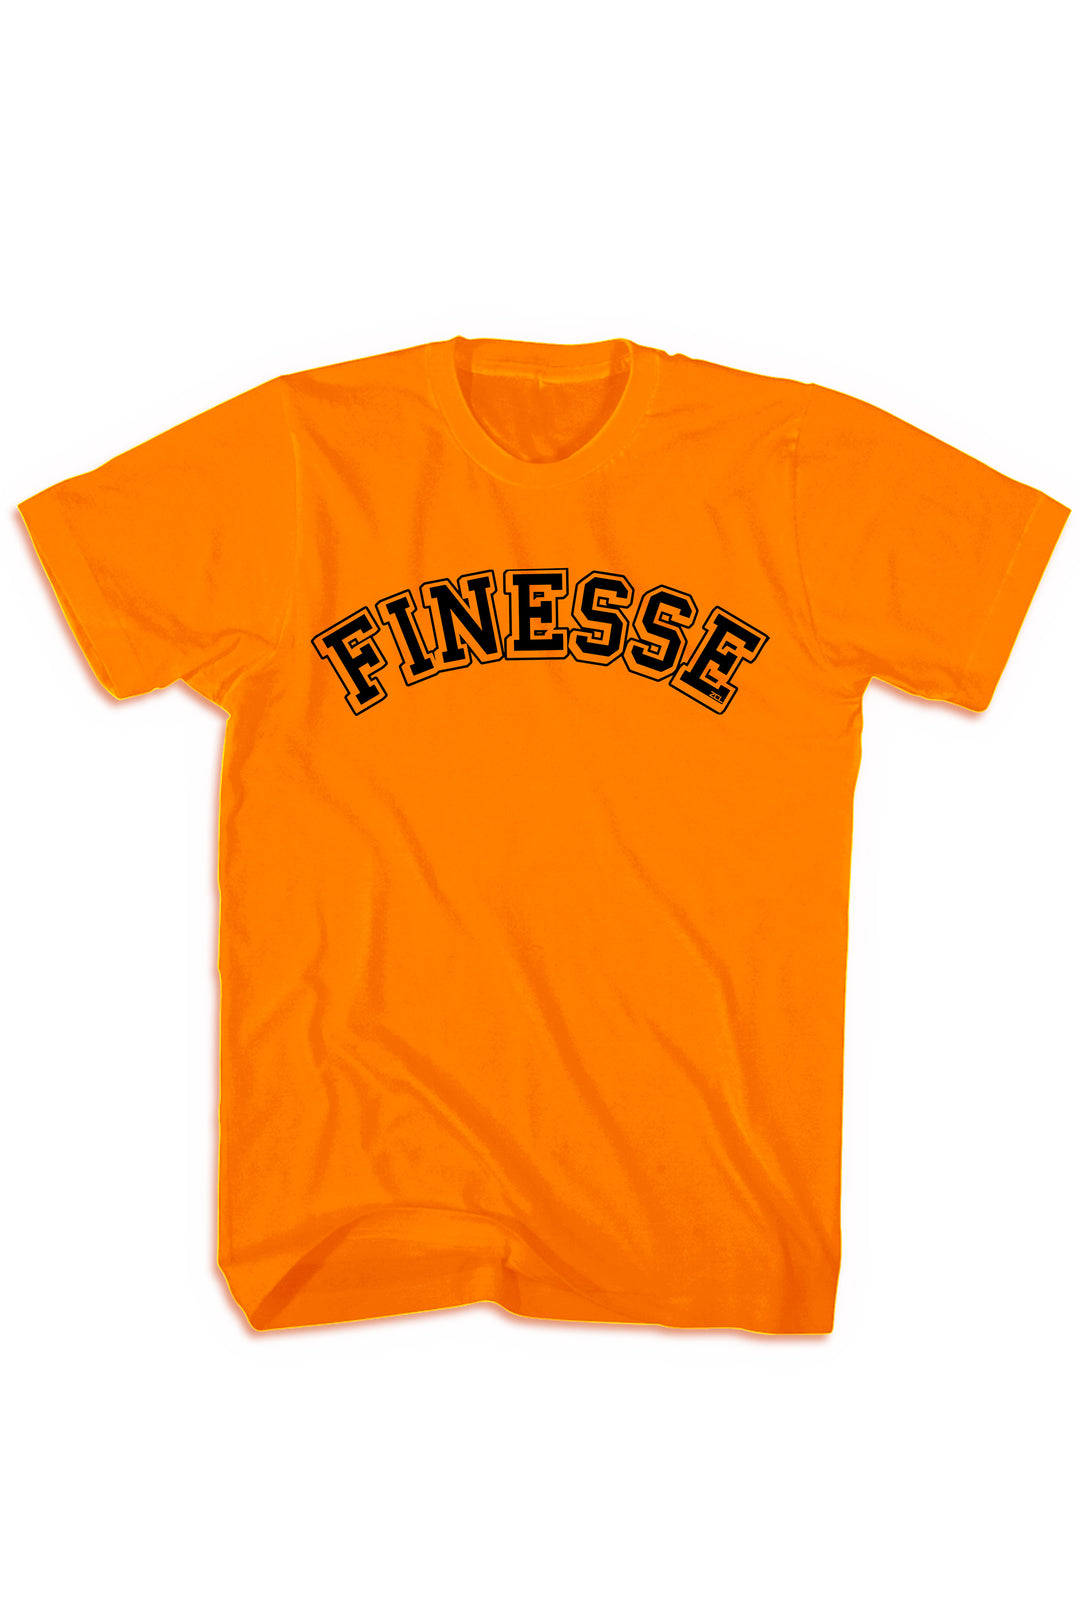 Finesse Tee (Black Logo) - Zamage